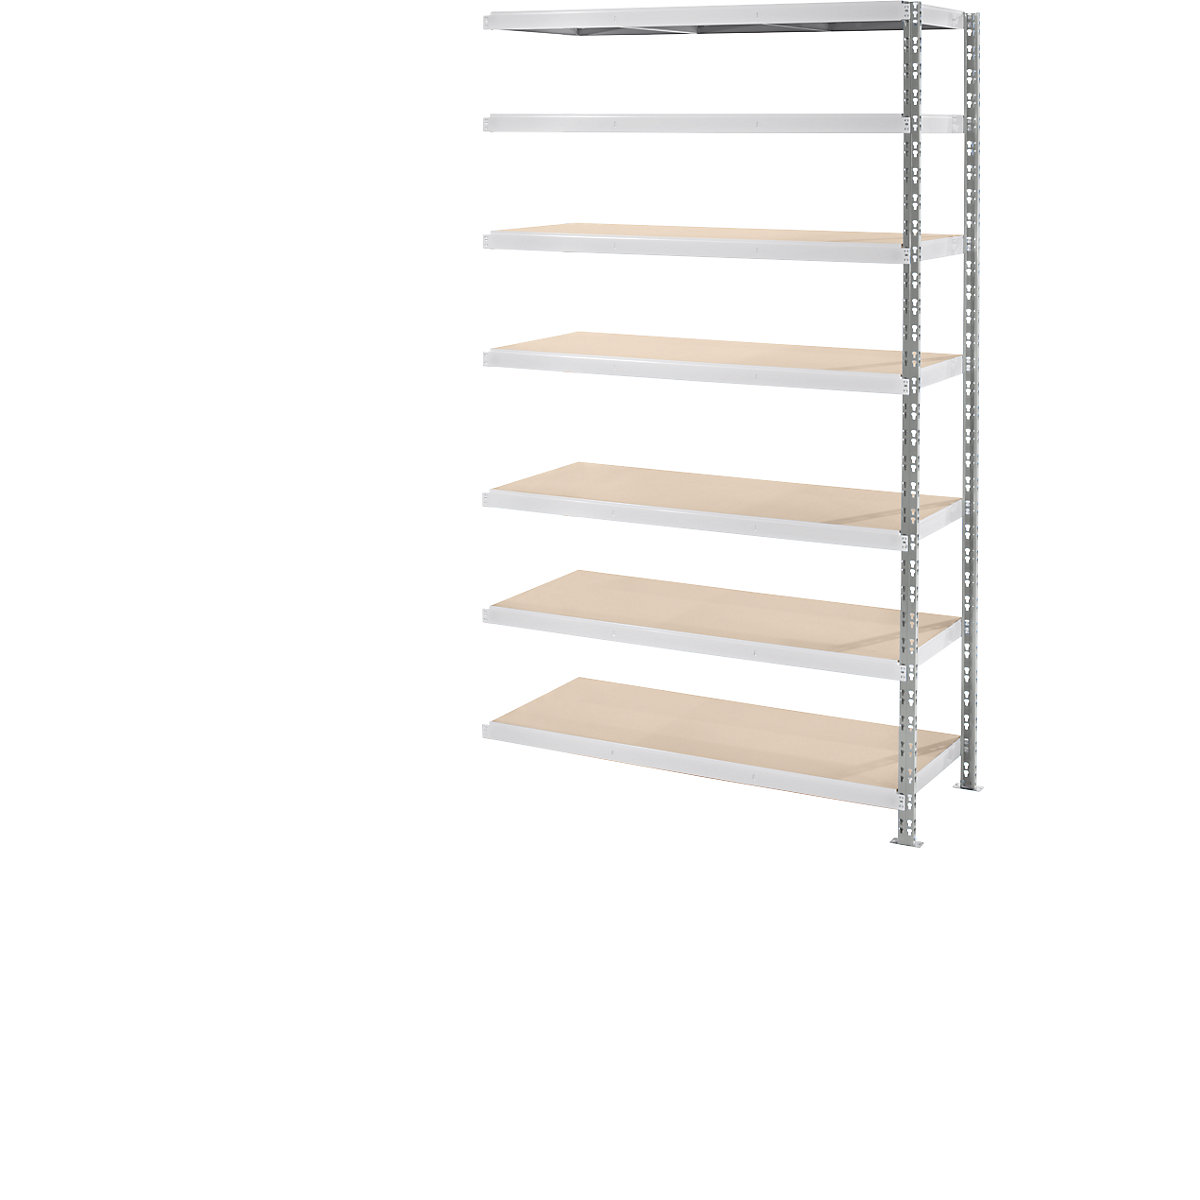 Wide span boltless shelf unit with moulded chipboard shelves, depth 600 mm, extension shelf unit, HxW 2522 x 1525 mm